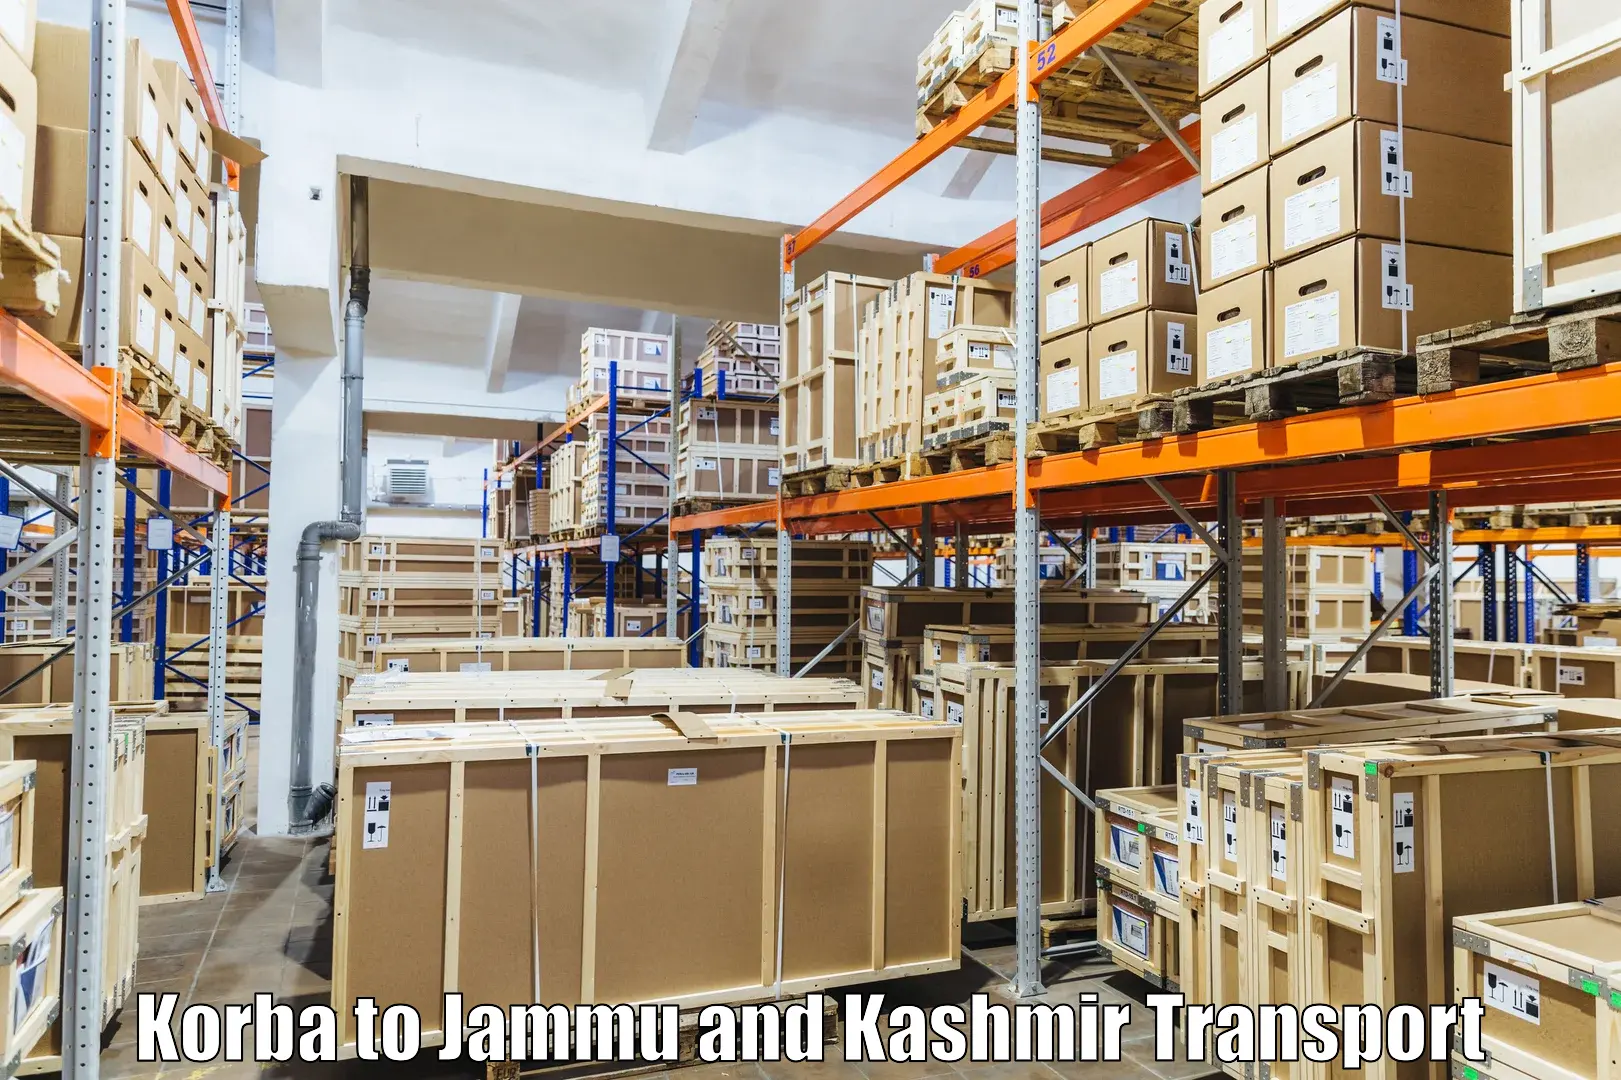 Truck transport companies in India Korba to Anantnag